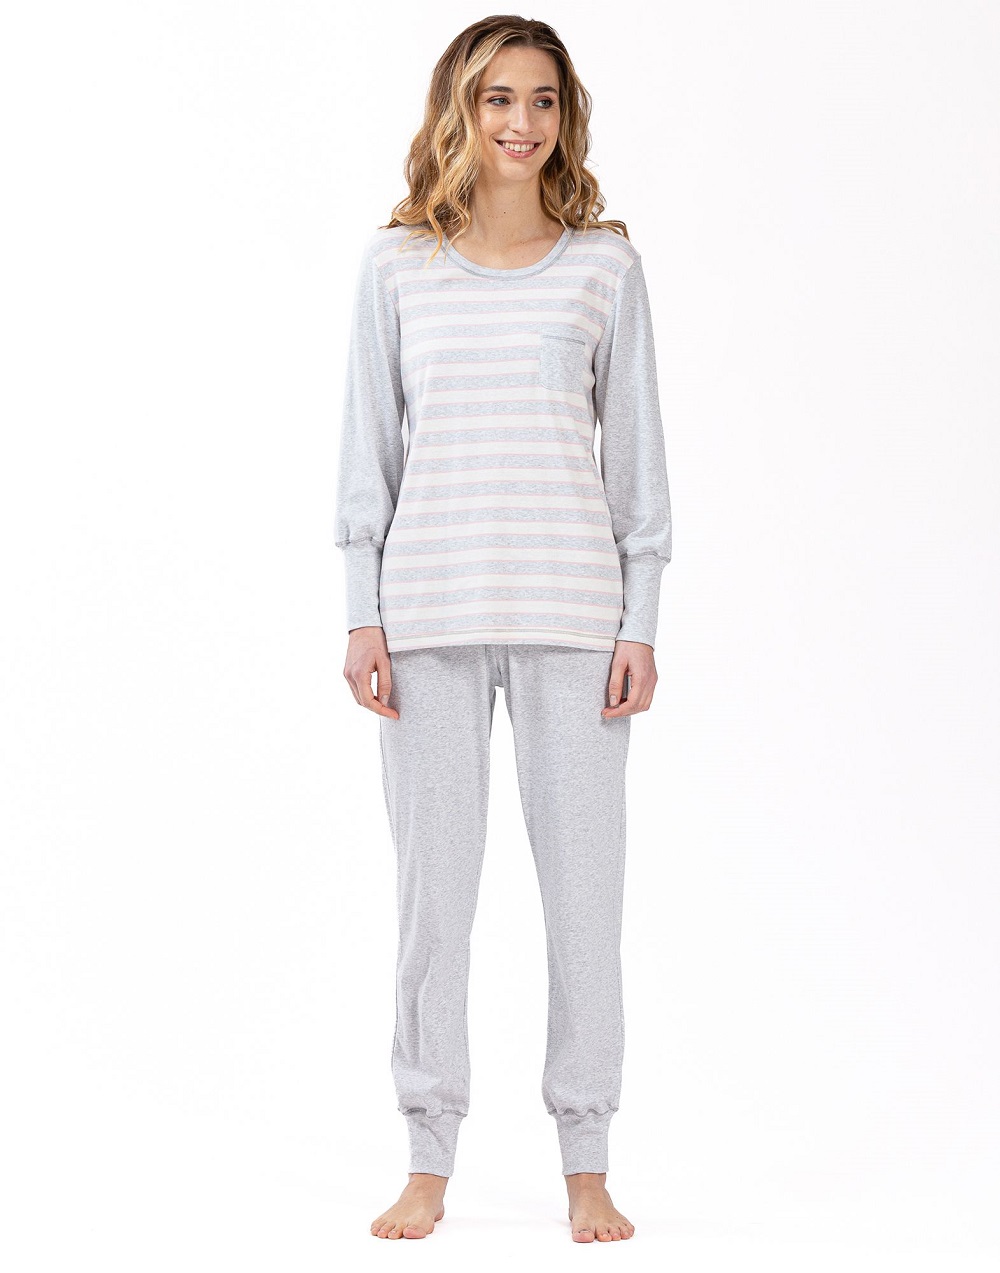 Le Chat Hygge pyjama top strepen, lange broek